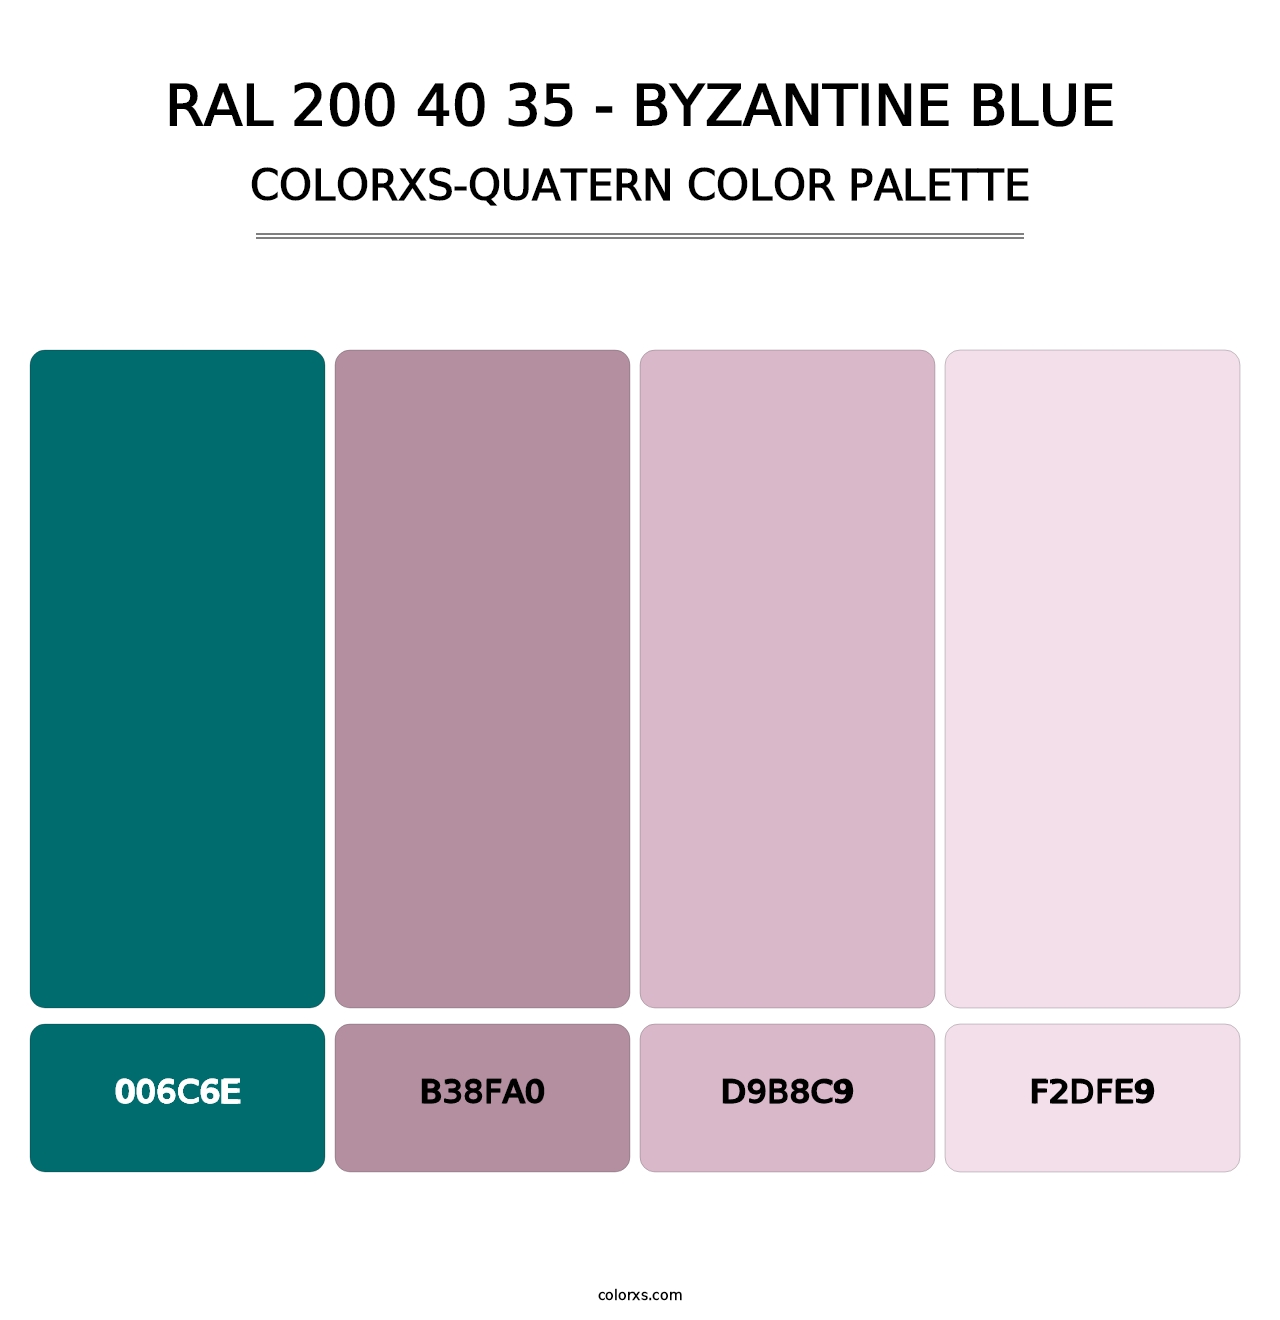 RAL 200 40 35 - Byzantine Blue - Colorxs Quatern Palette